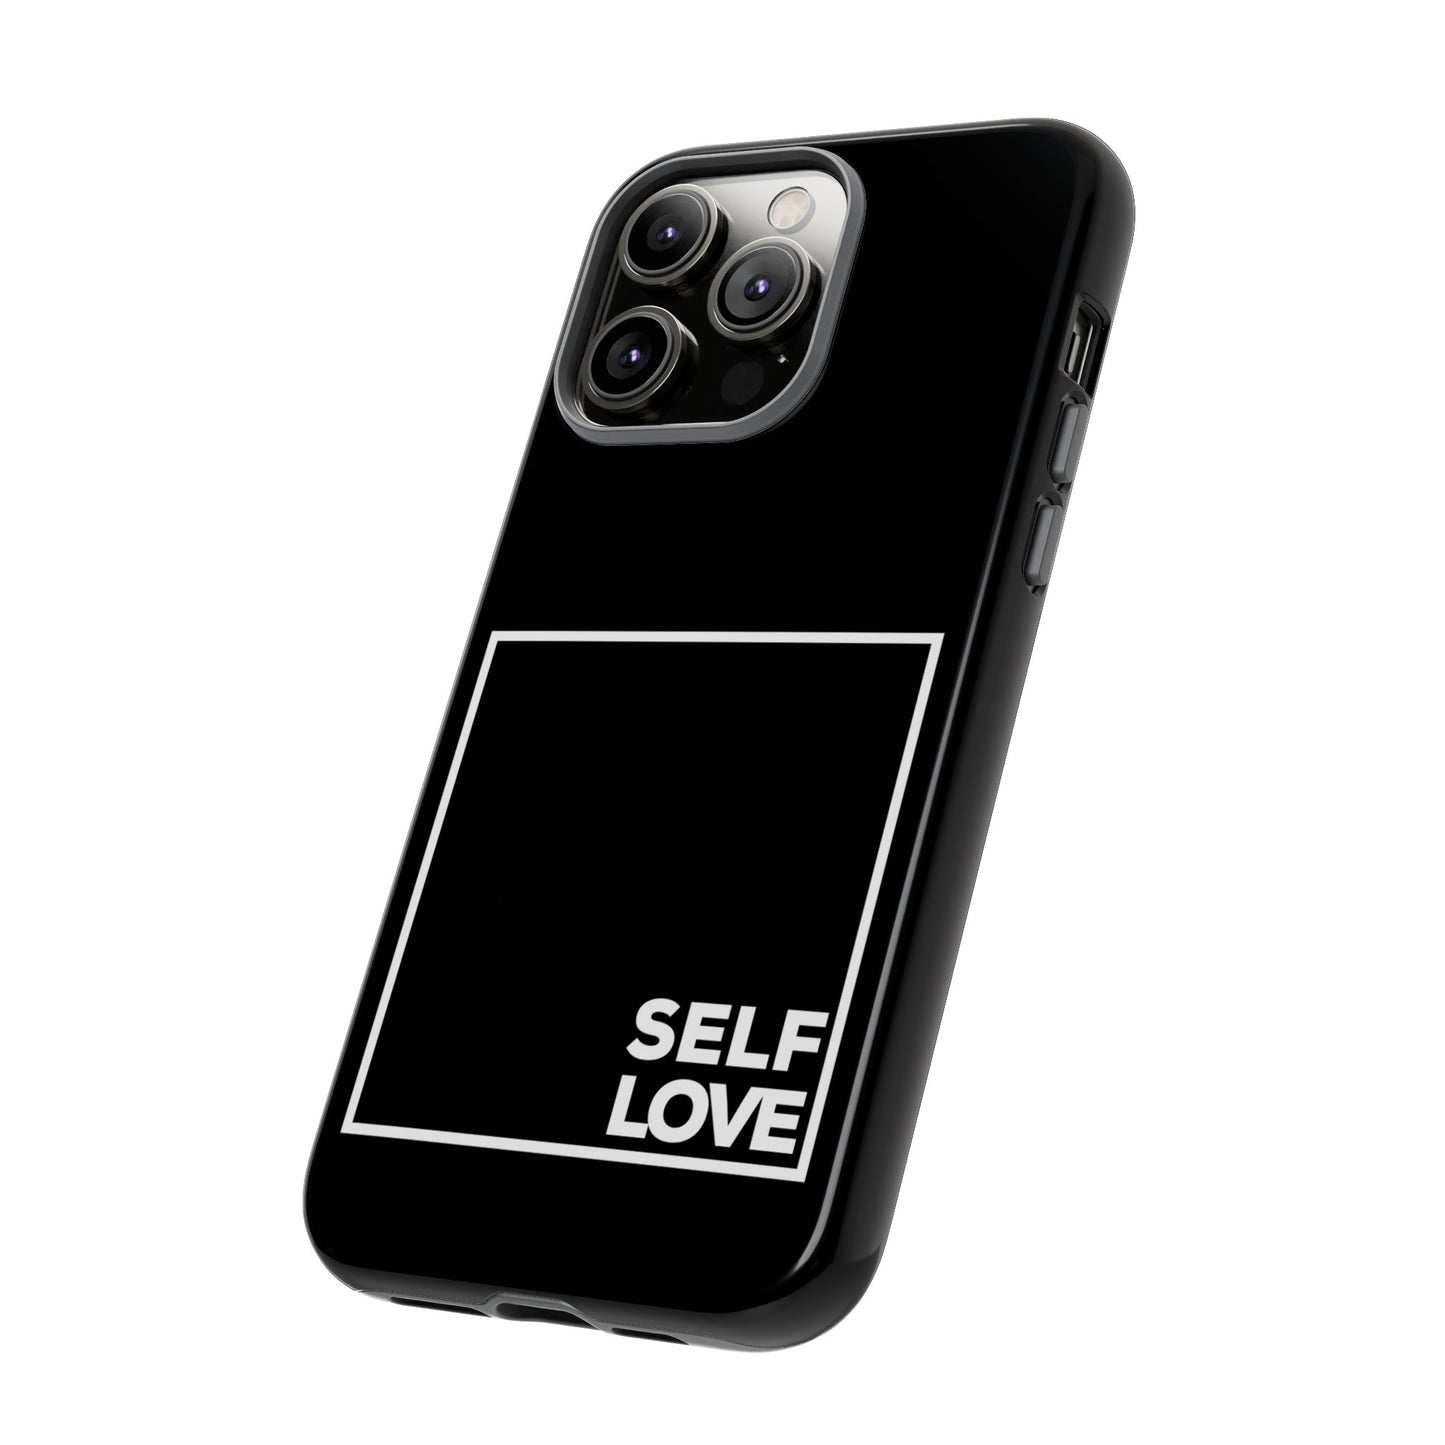 Self Love (Black)